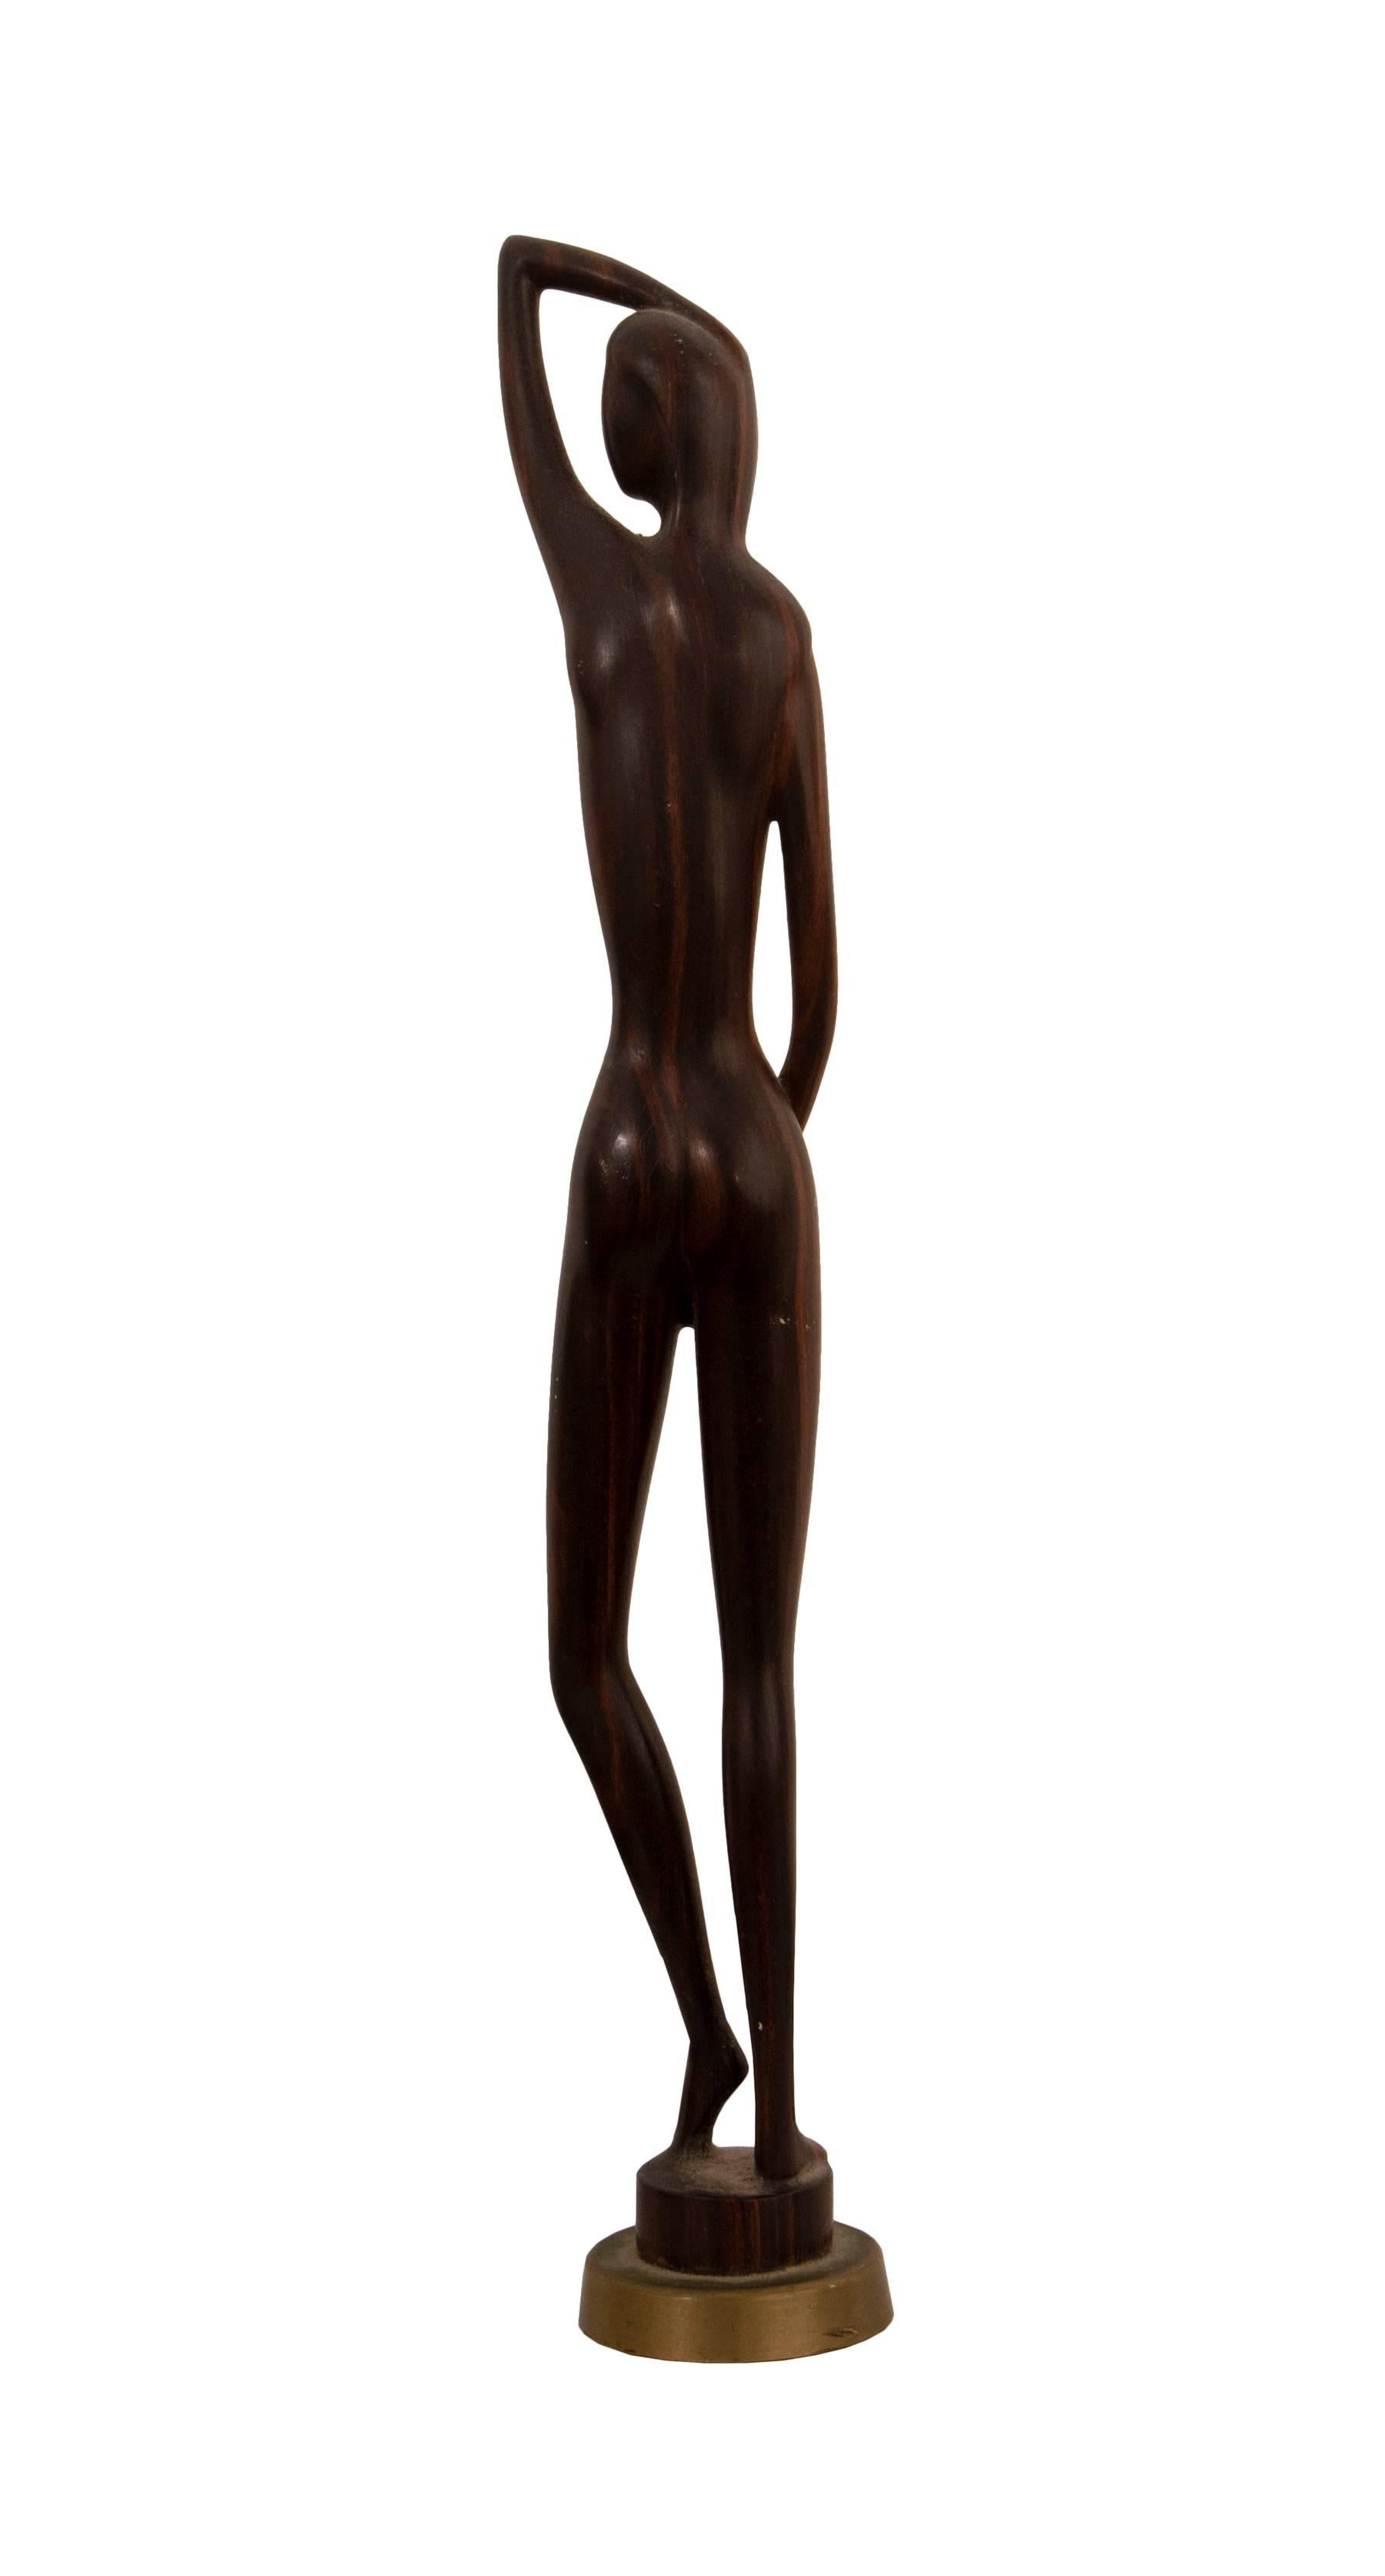 American Modernist Carved Sculpture For Sale